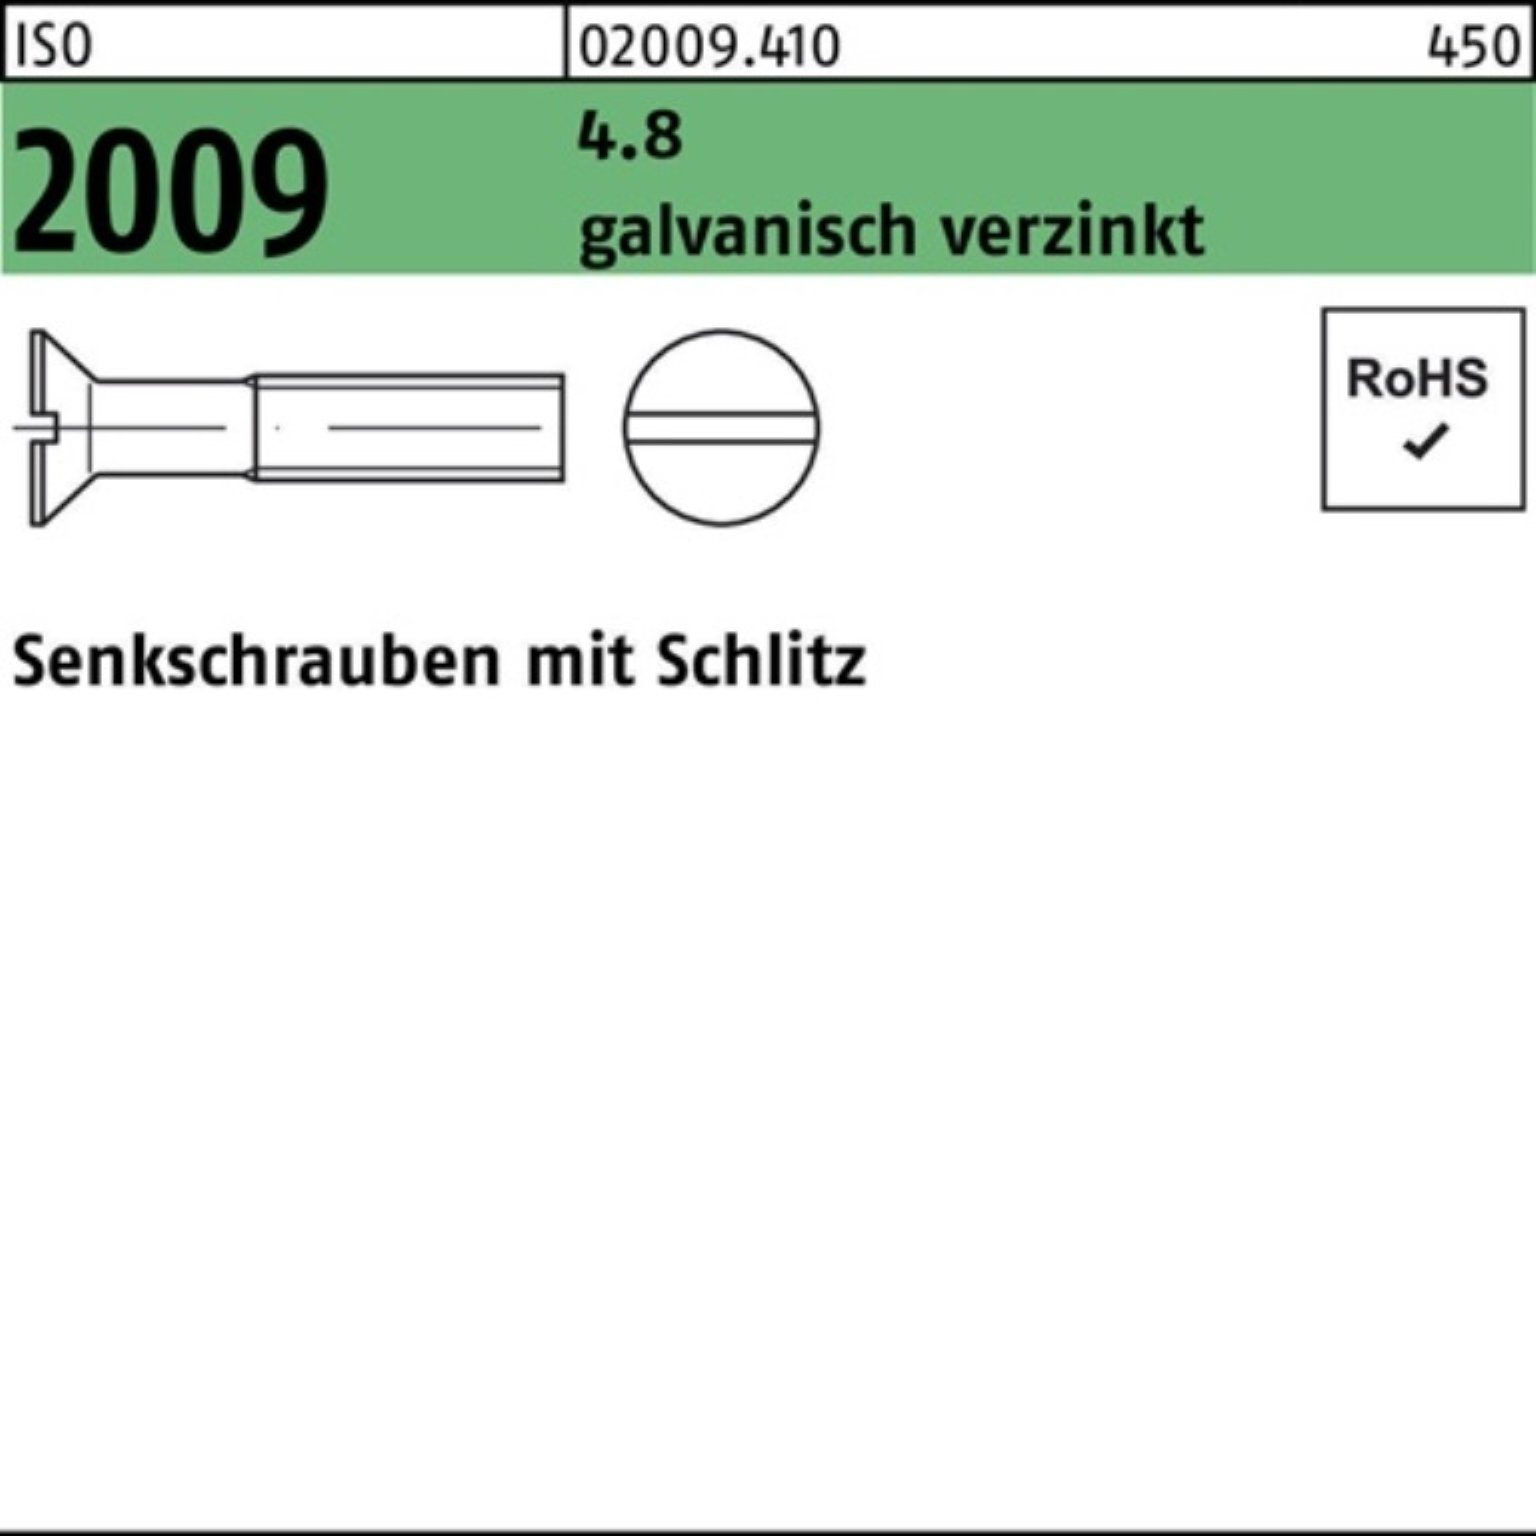 M2x galv.verz. Reyher ISO Senkschraube 4.8 200er St 10 200 Senkschraube Schlitz Pack 2009